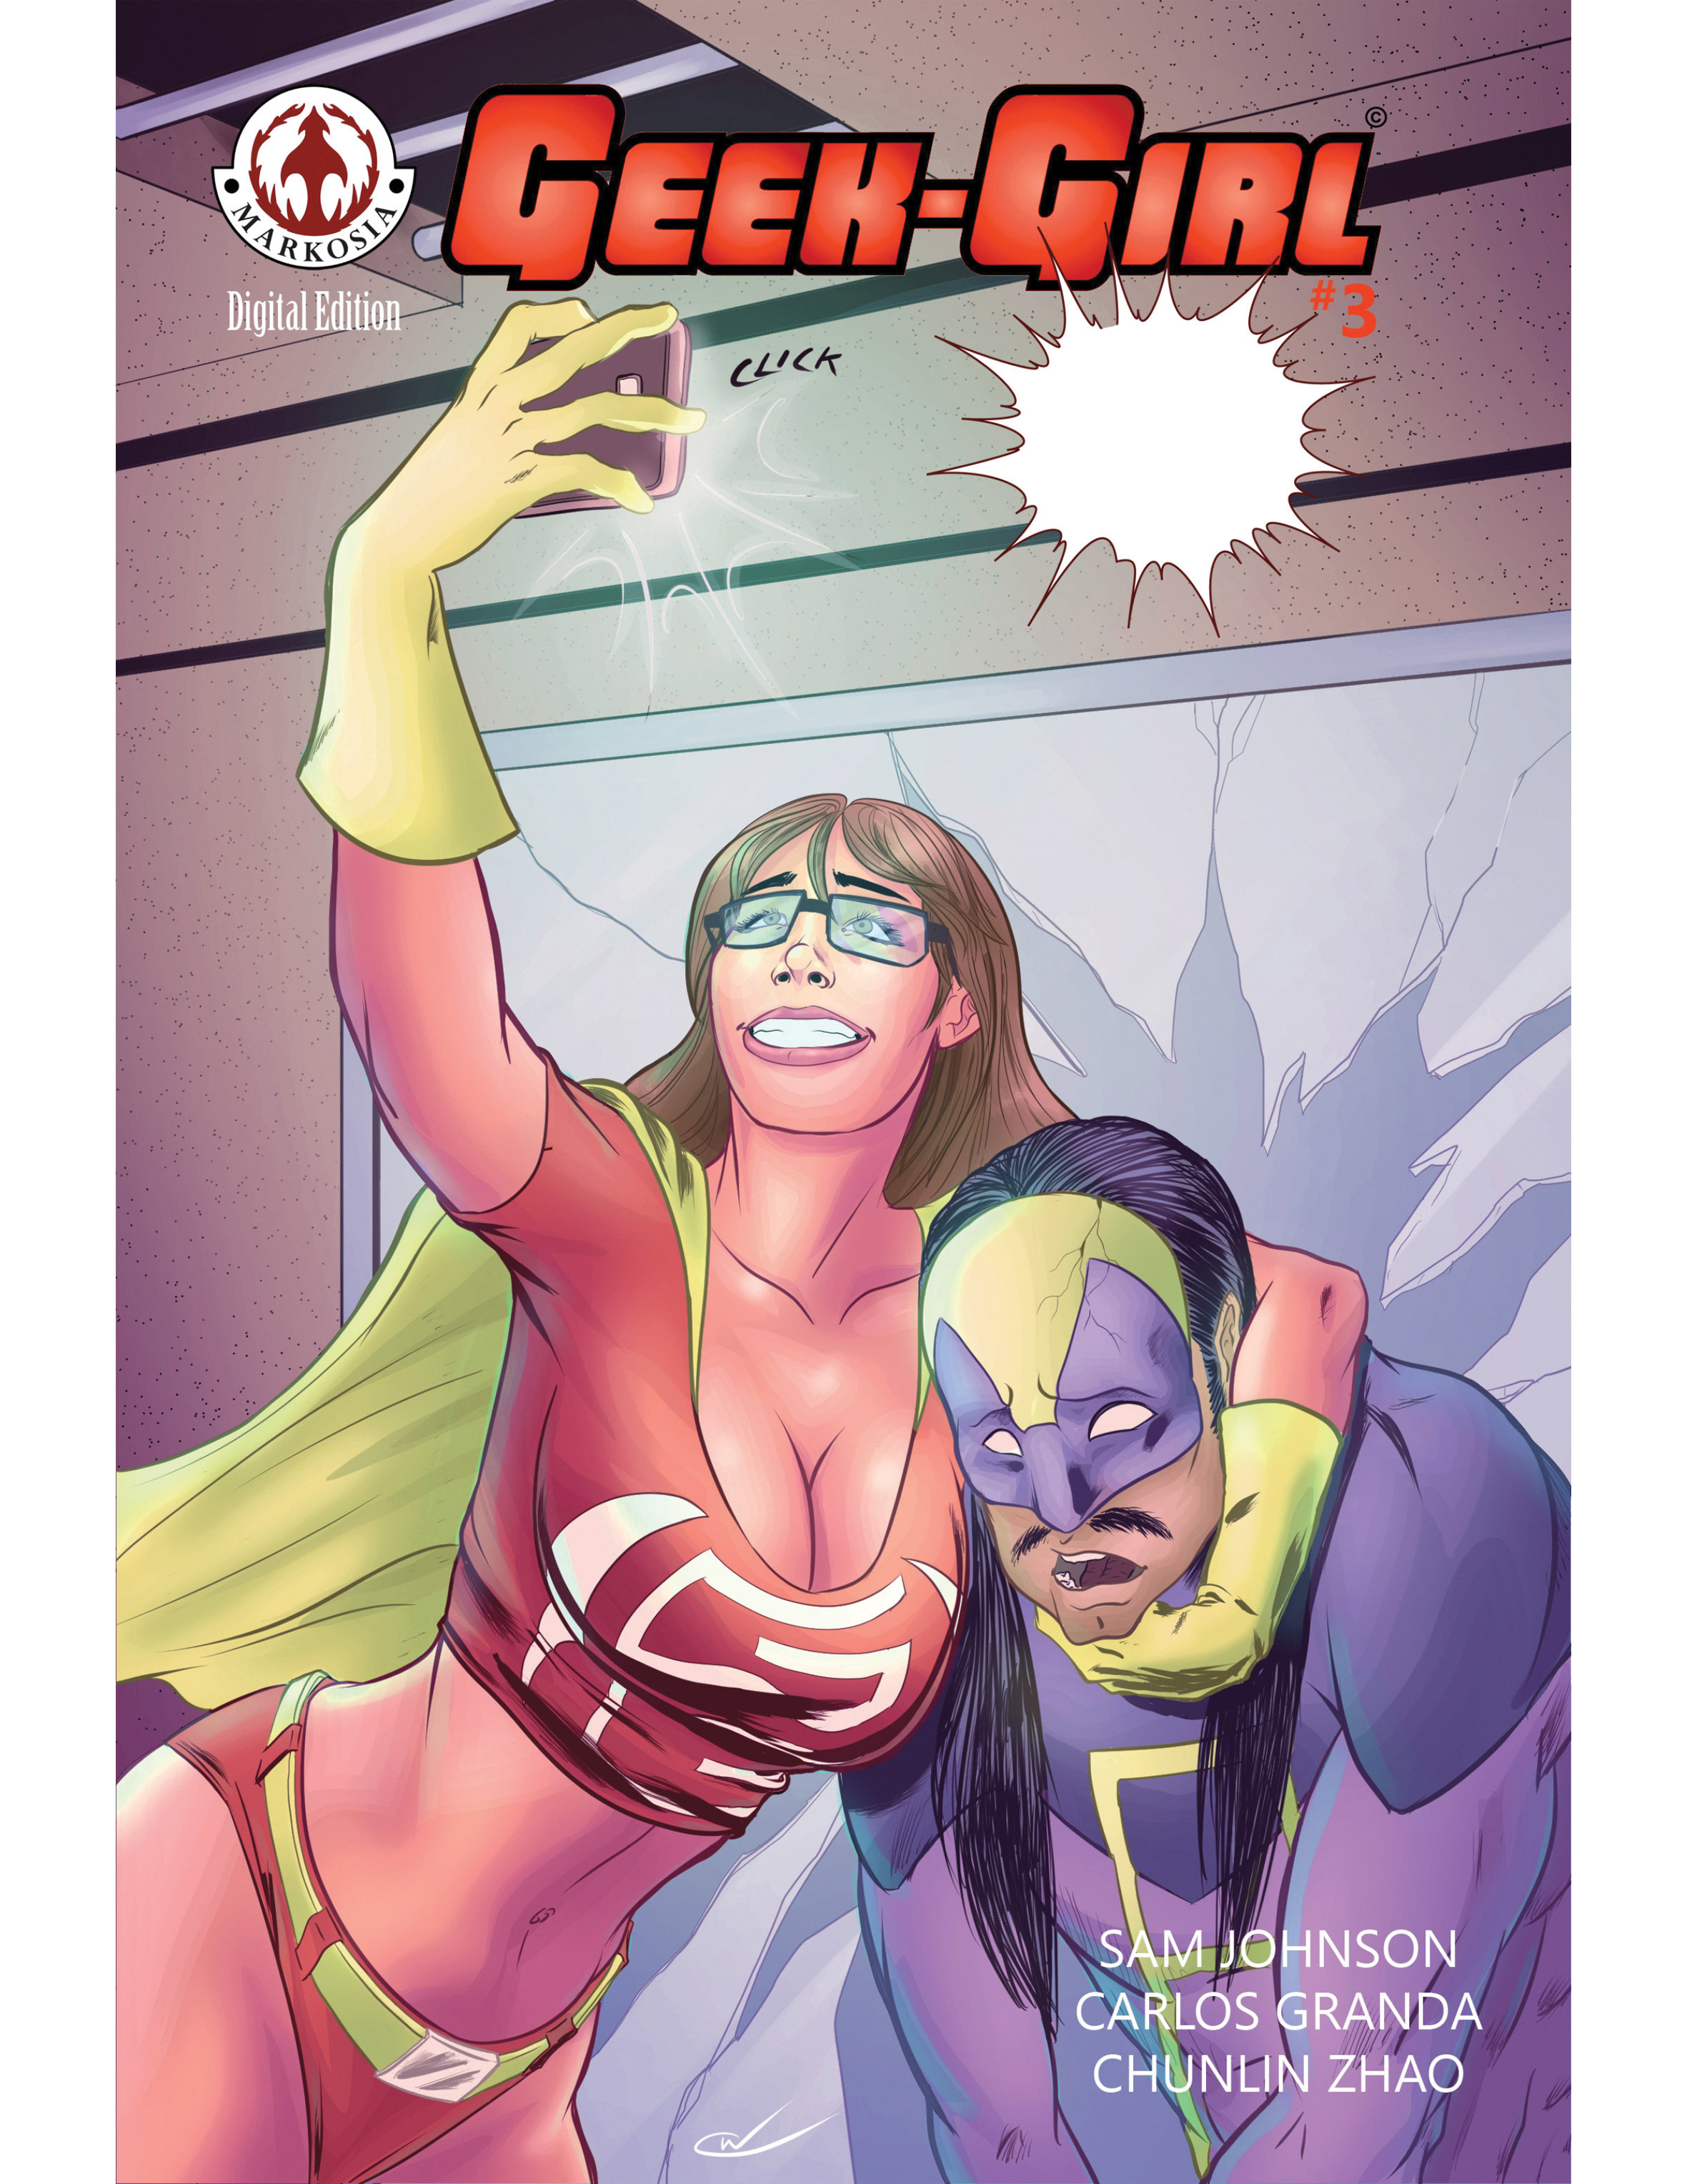 Read online Geek-Girl comic -  Issue #3 - 1